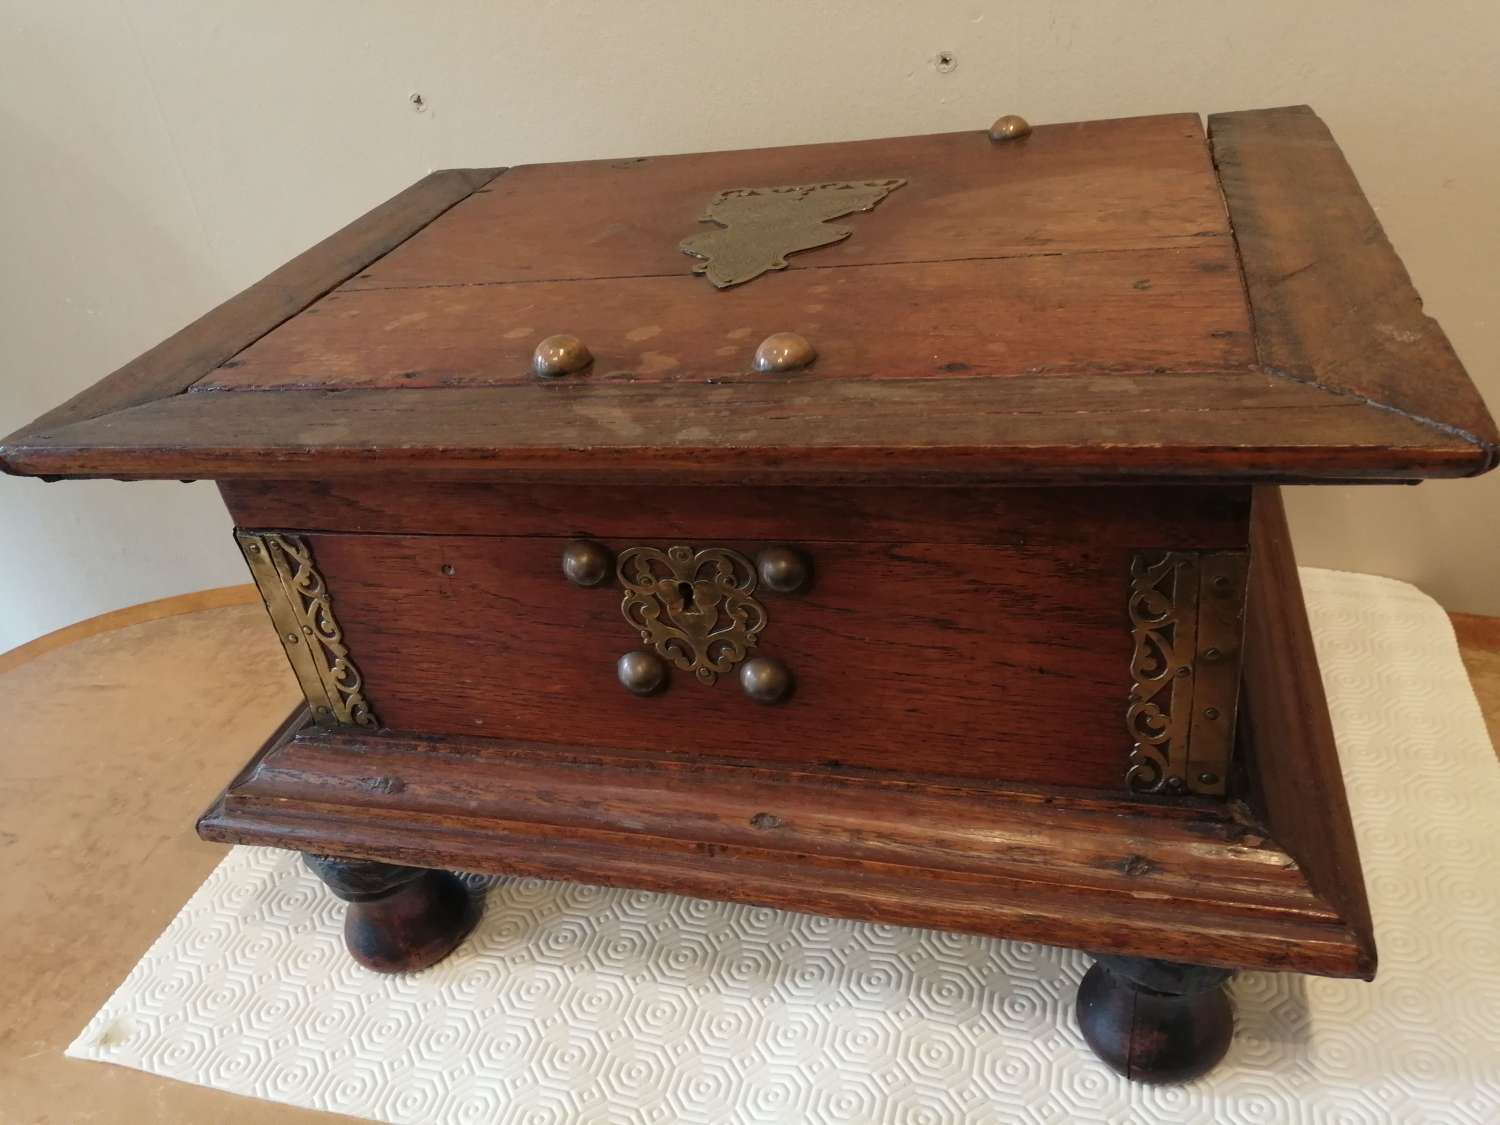 An 18th century Ceylonese Dutch Colonial wooden box